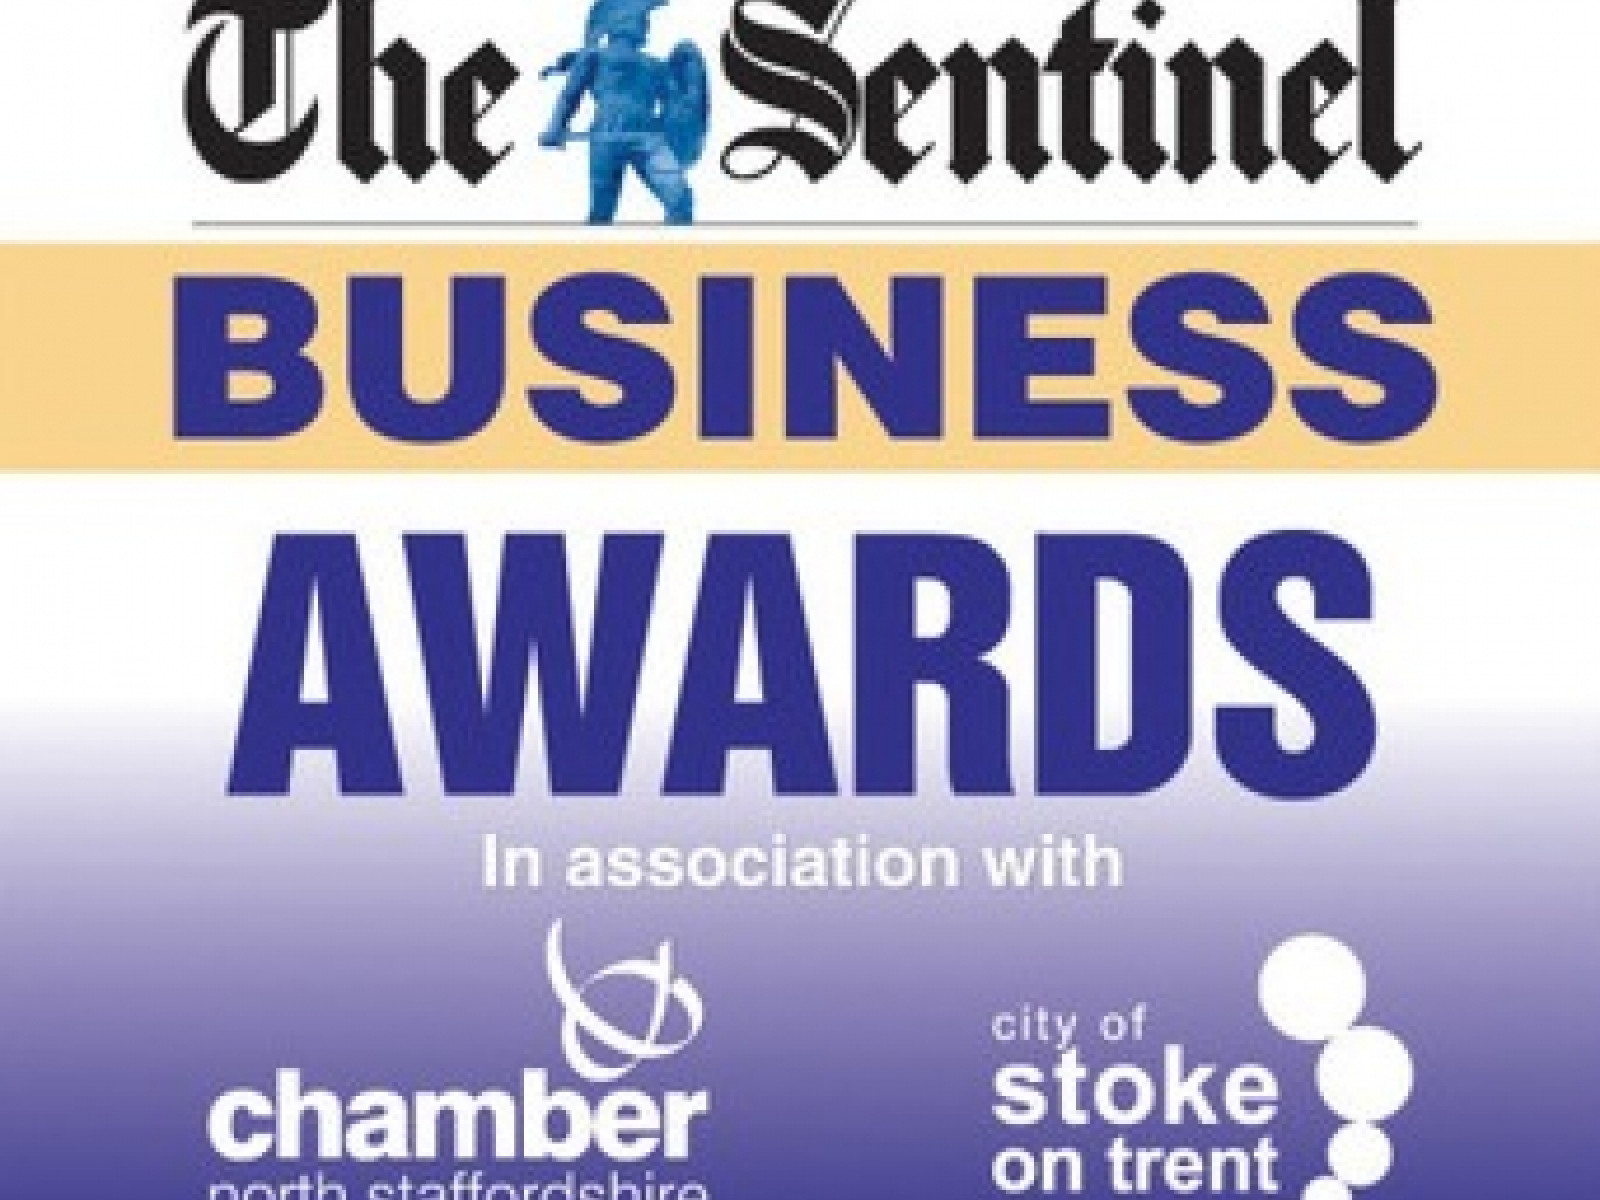 Shortlisted for Business Innovation Award